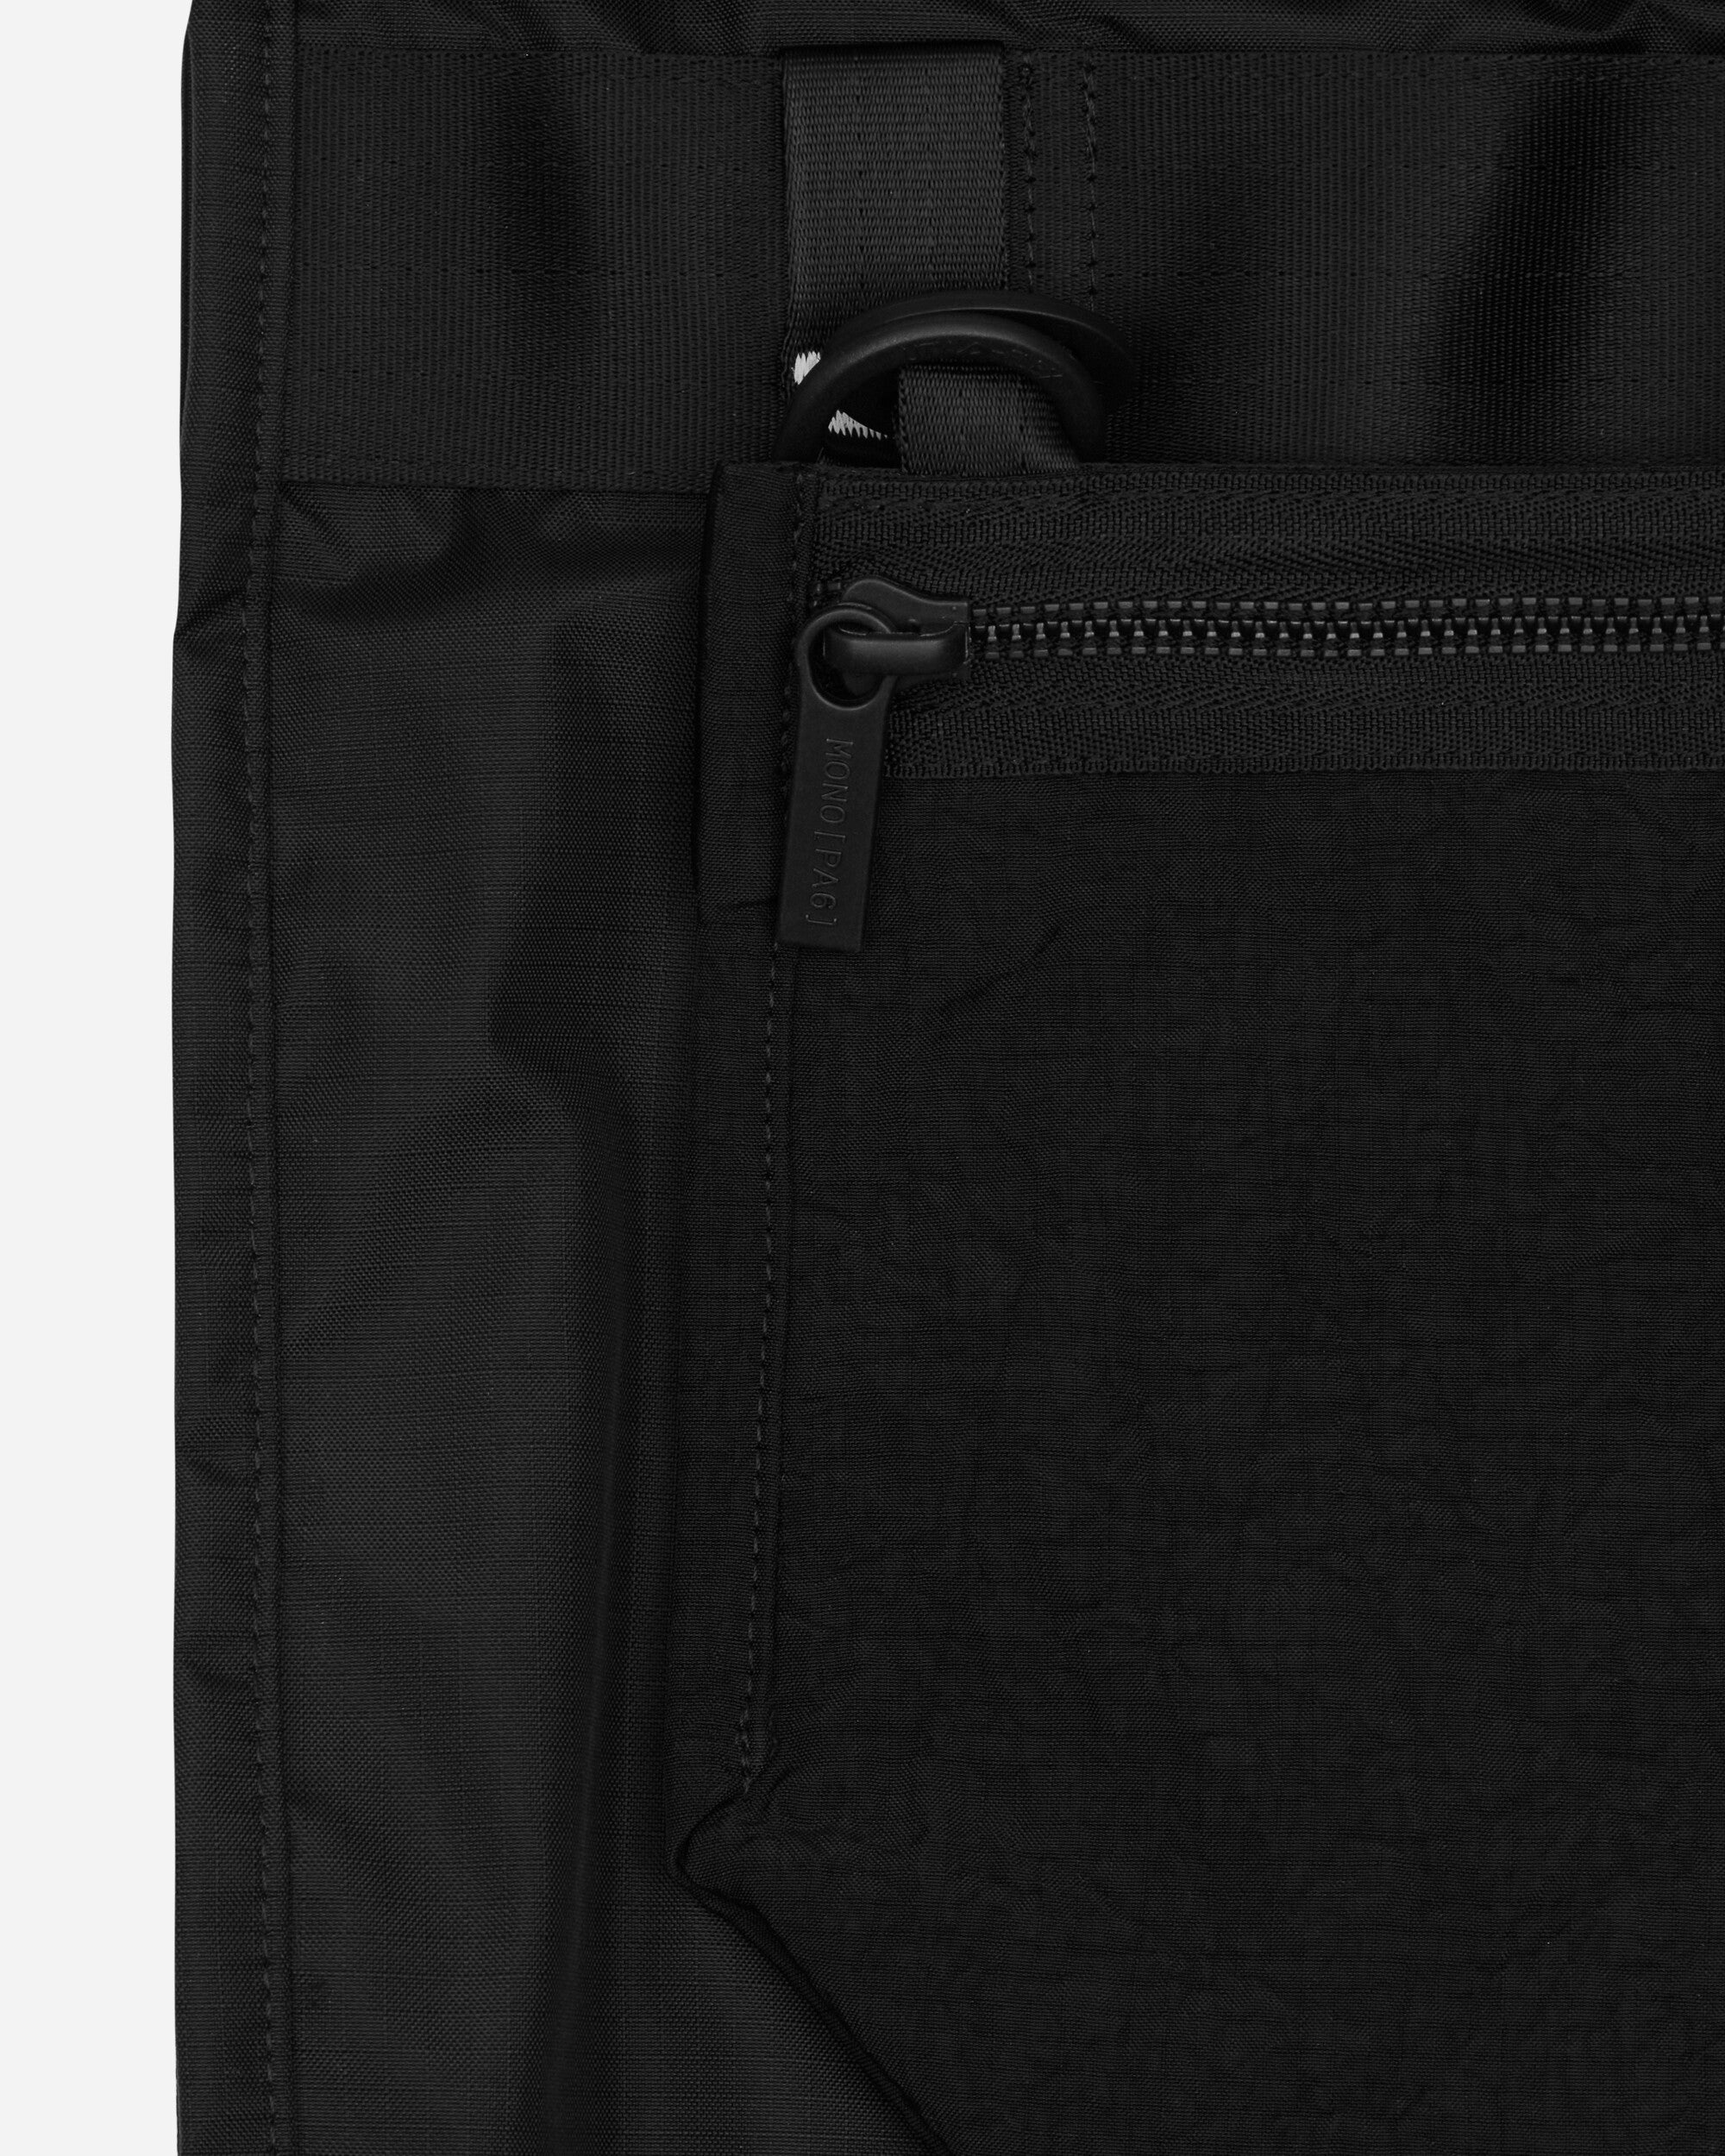 Freitag Mpa6 Black Bags and Backpacks Backpacks FREITAGA010 BB